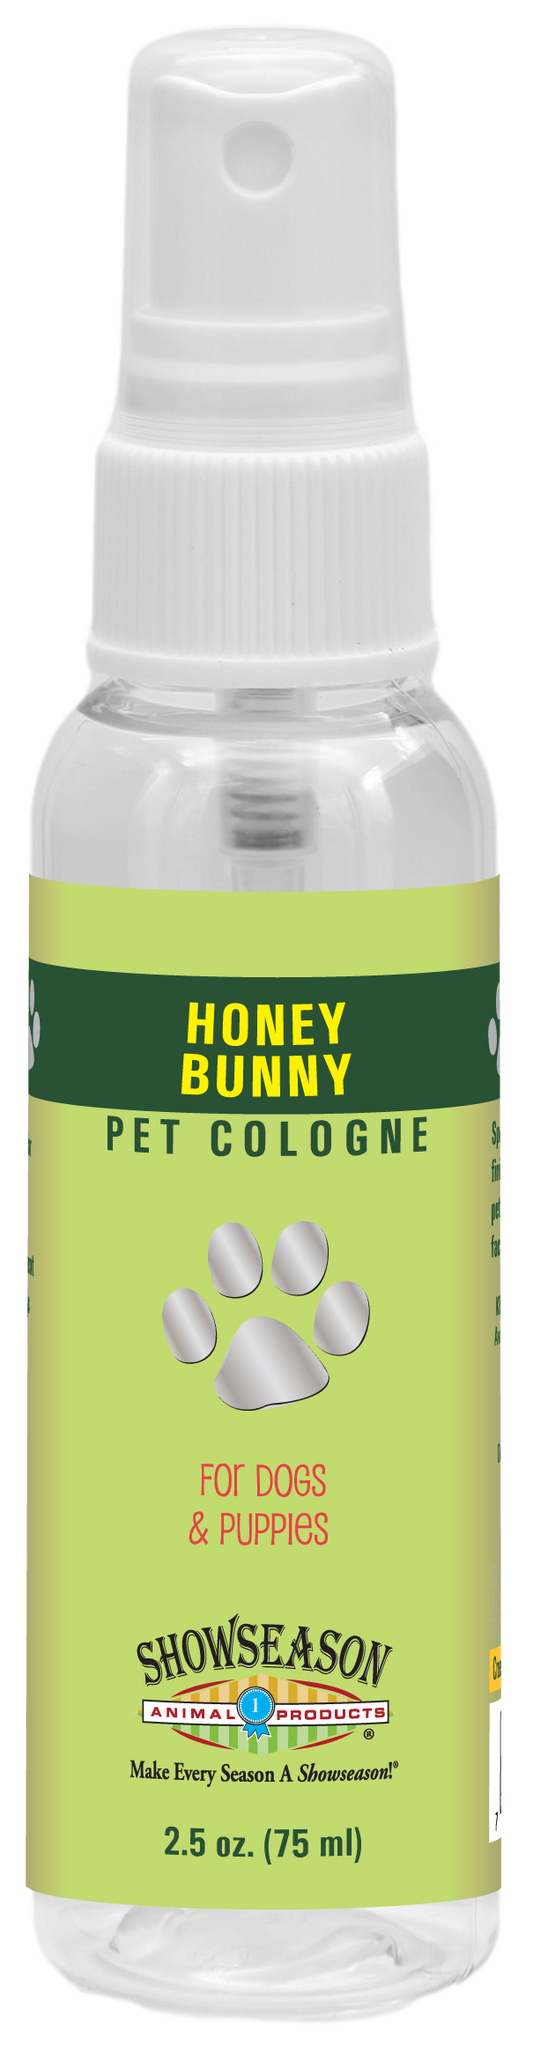 Honey Bunny Pet Cologne | Showseason®